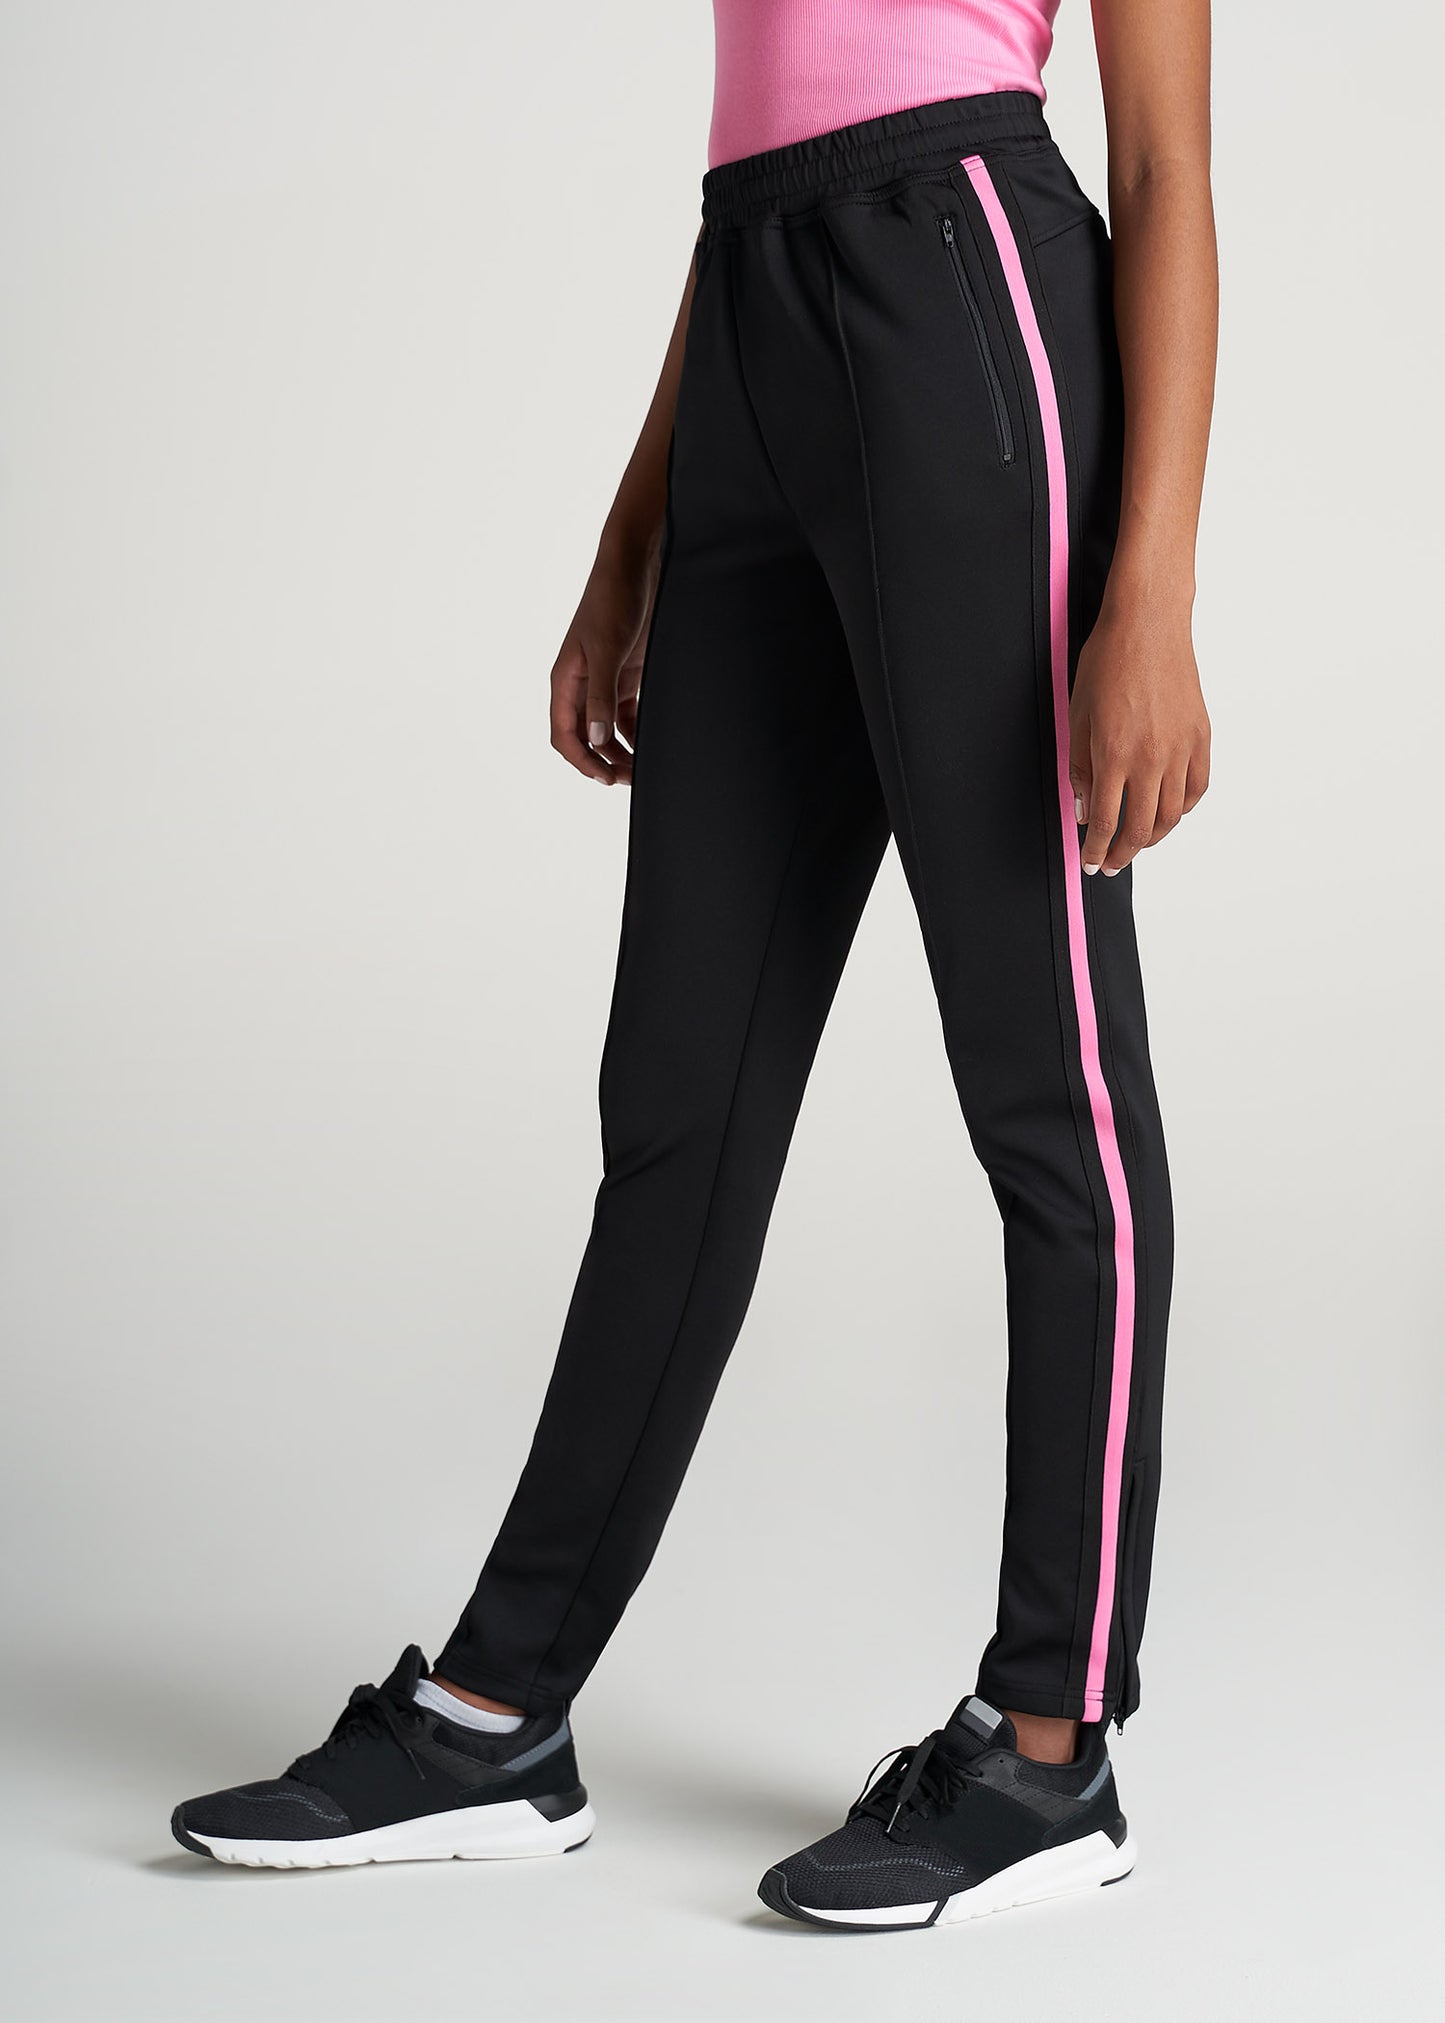 Wear for Women: Tall Black Pink Stripe Pant – Tall